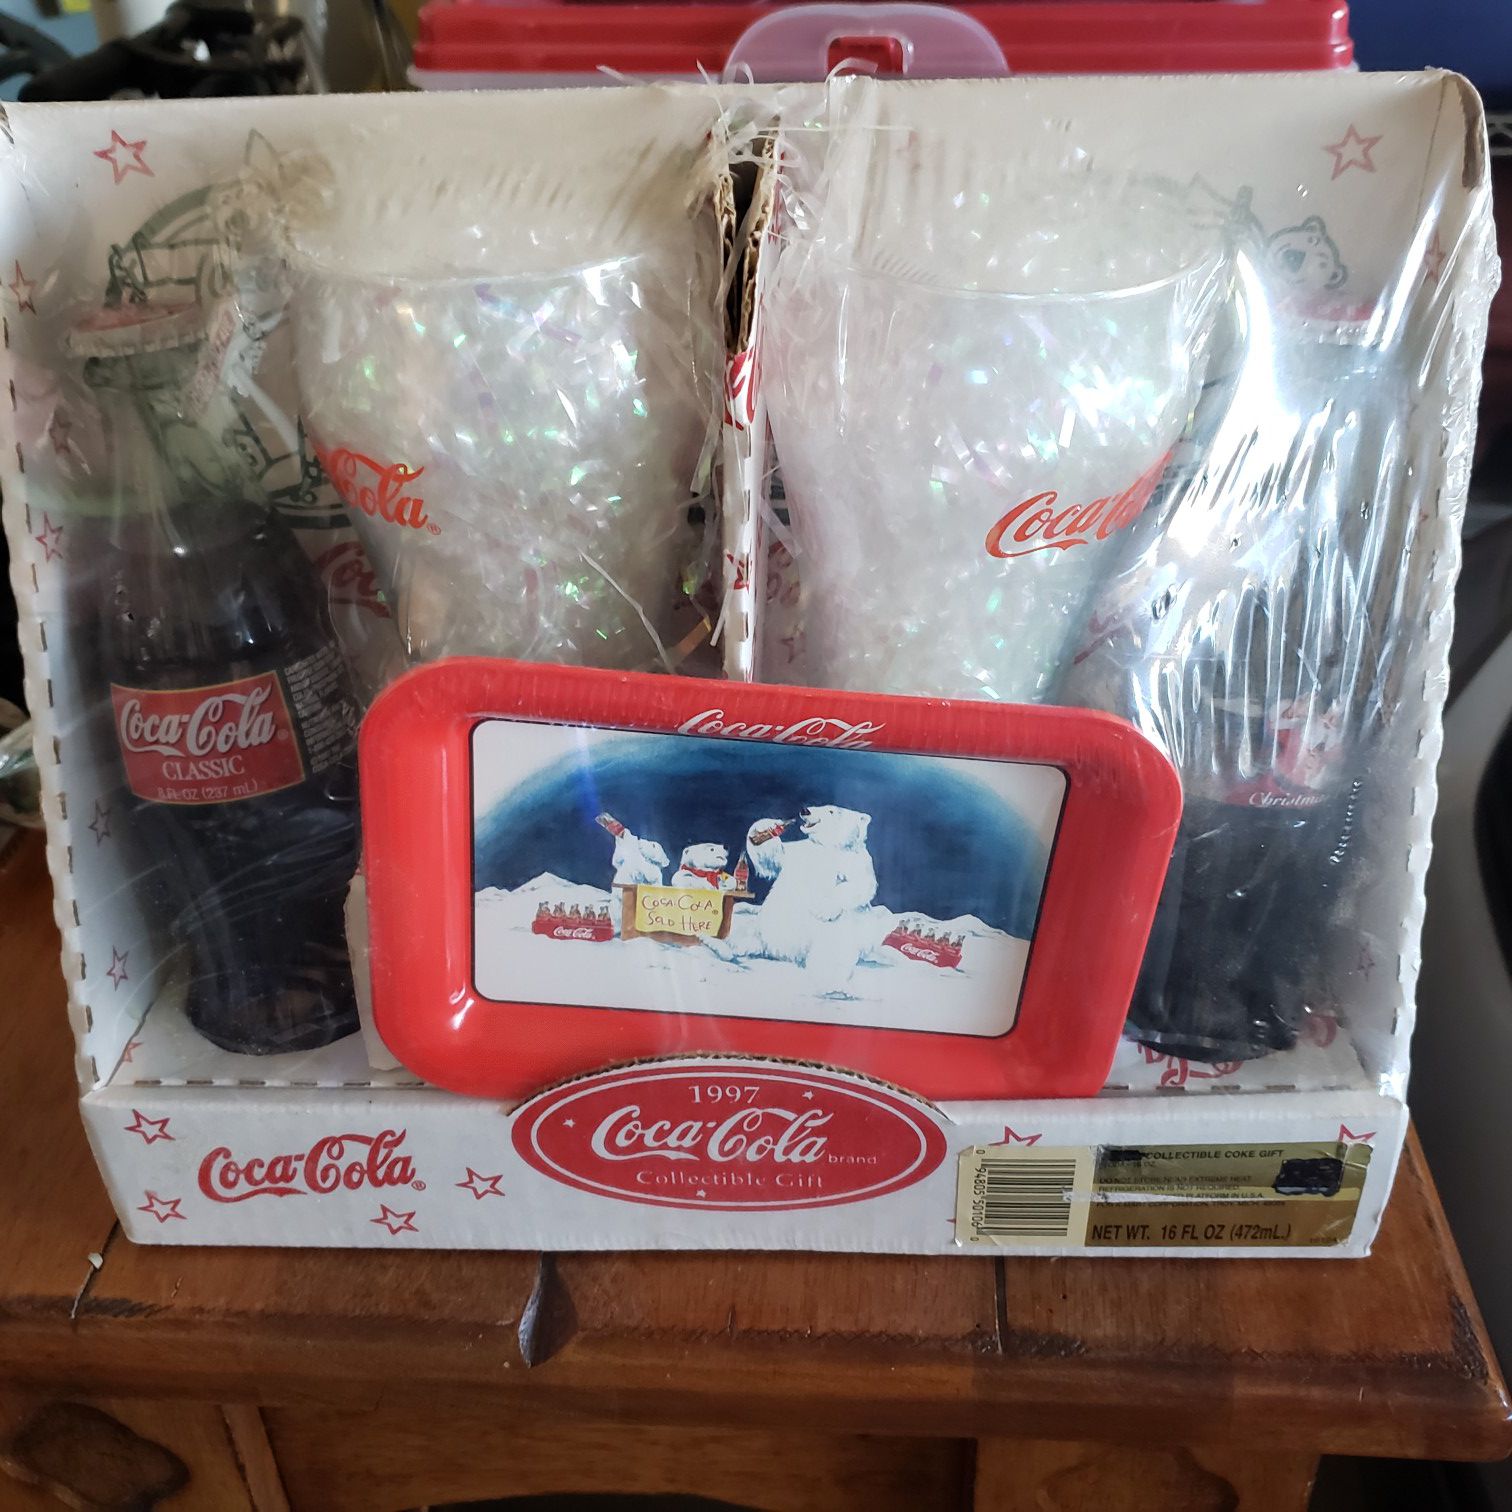 Coca Cola collectable